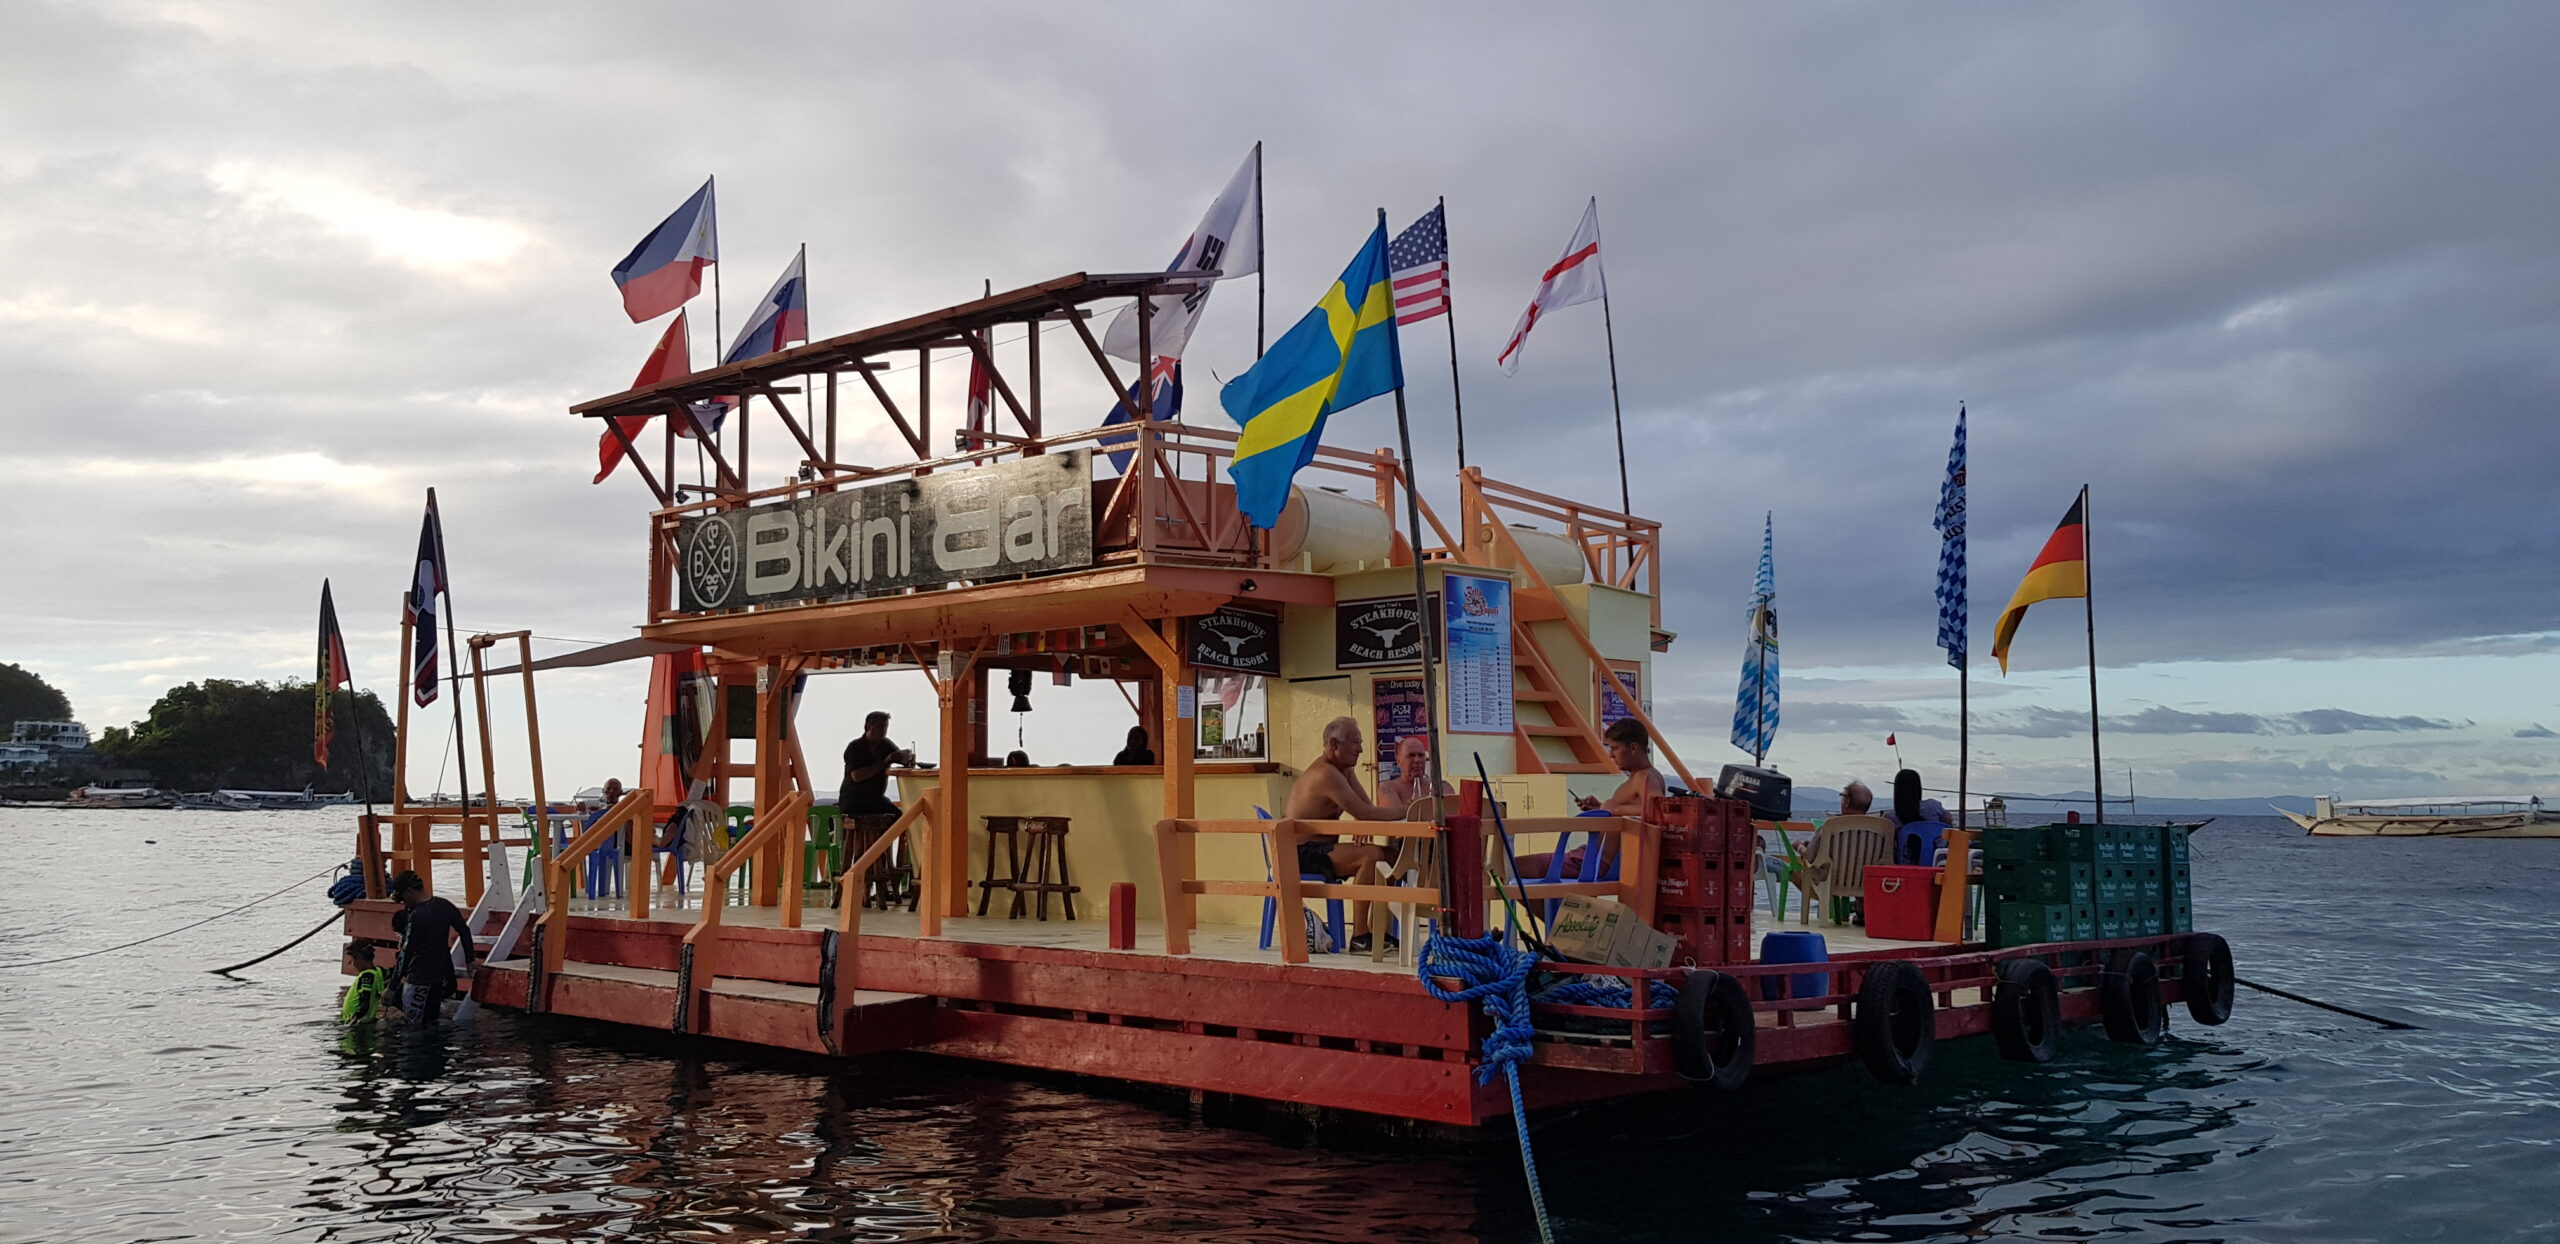 Mindoro Attractions - Bikini Floating Bar